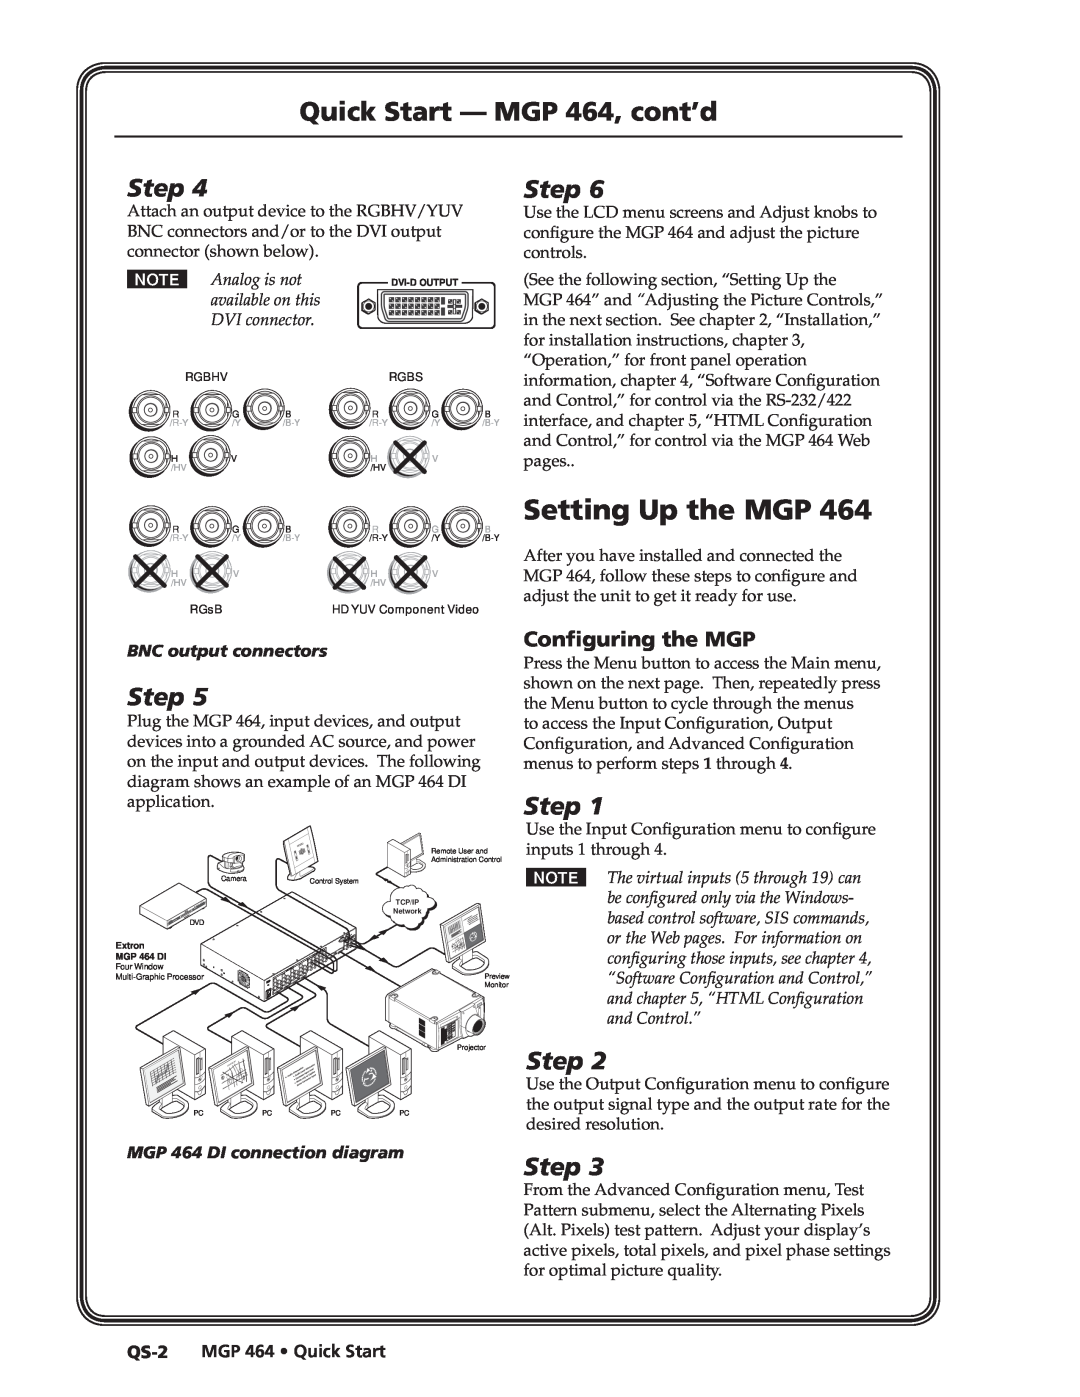 Extron electronic MGP 464 DI Setting Up the MGP, Quick Start - MGP 464, cont’d, Configuring the MGP, Preliminary, Step 